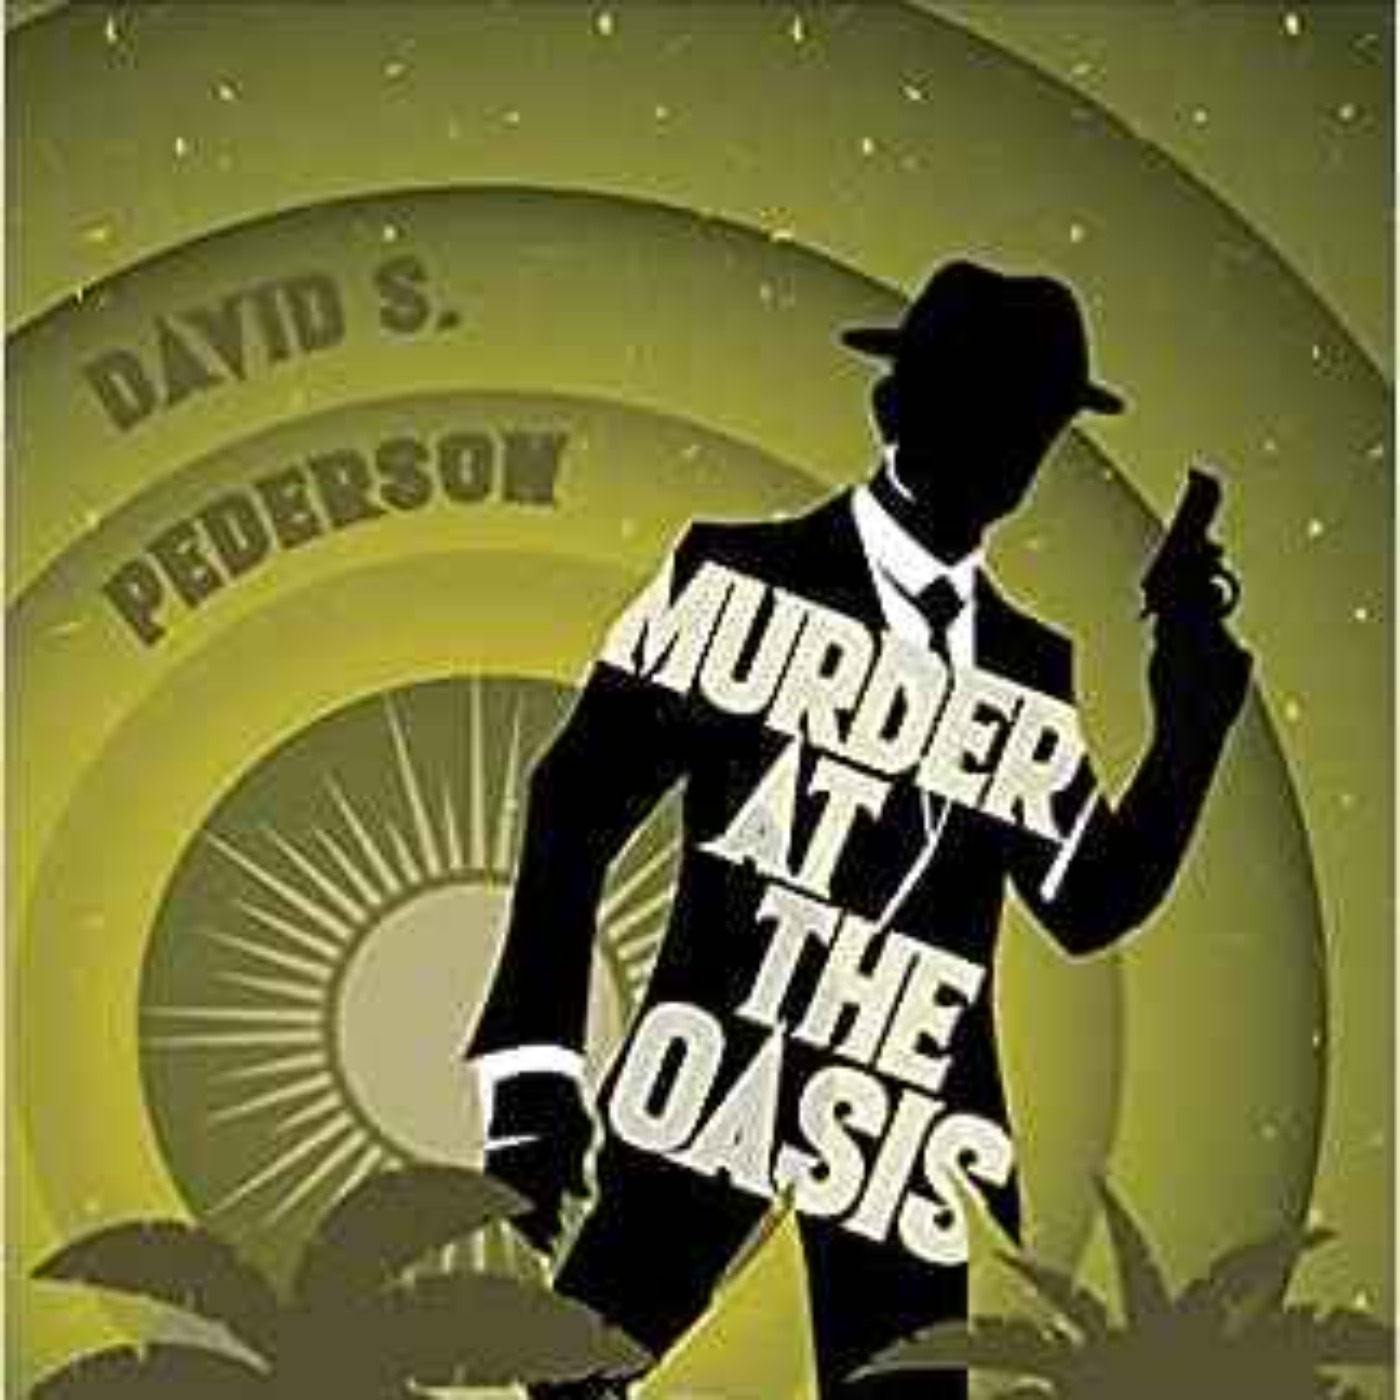 David S. Pederson - Murder at the Oasis